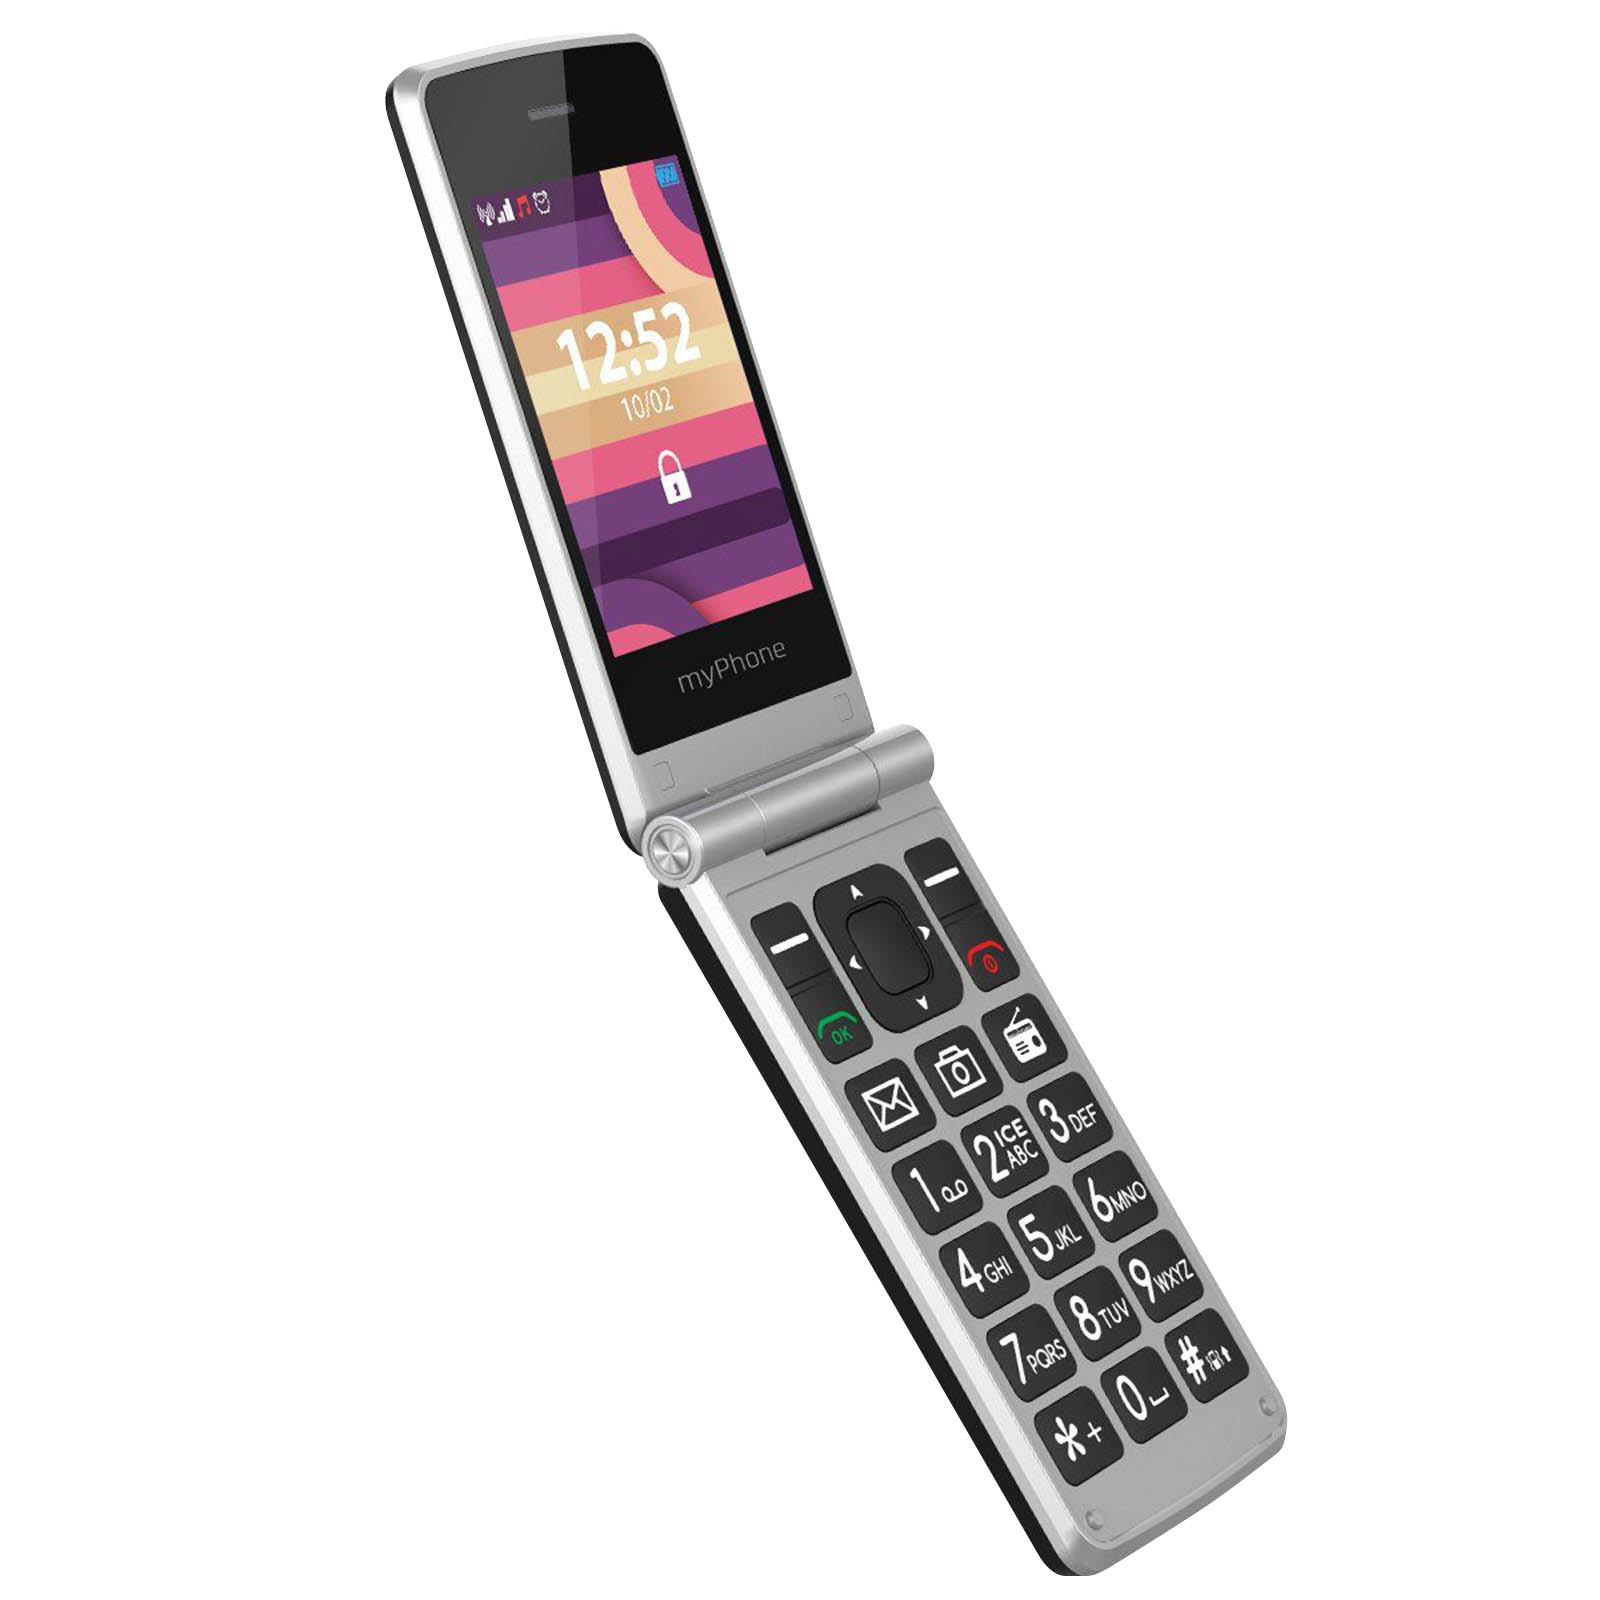 Schwarz Telefone, MYPHONE 4G LTE Tango